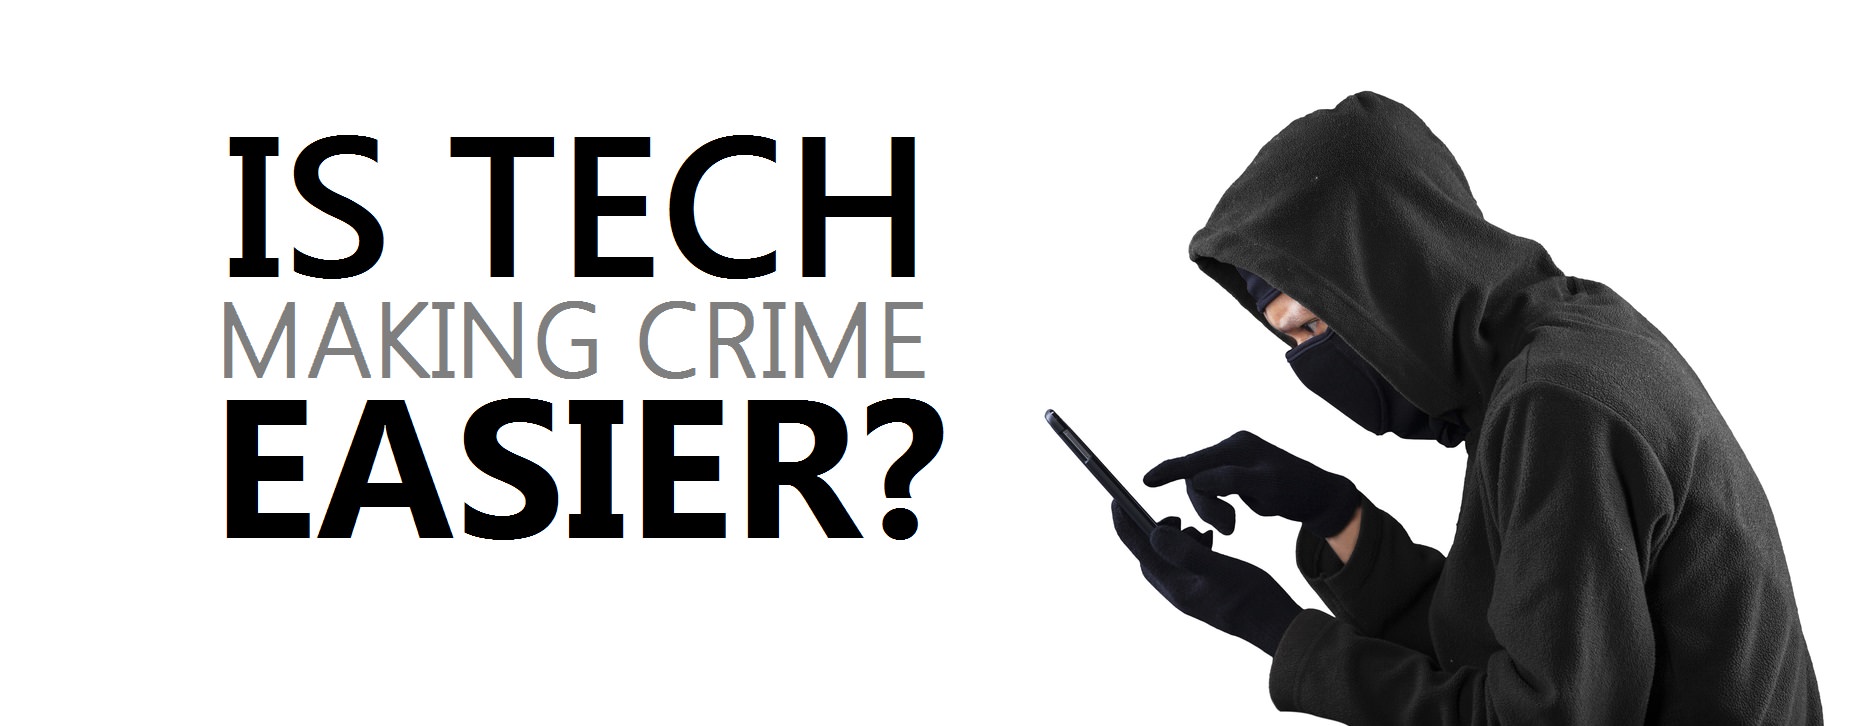 tech making crime easier title